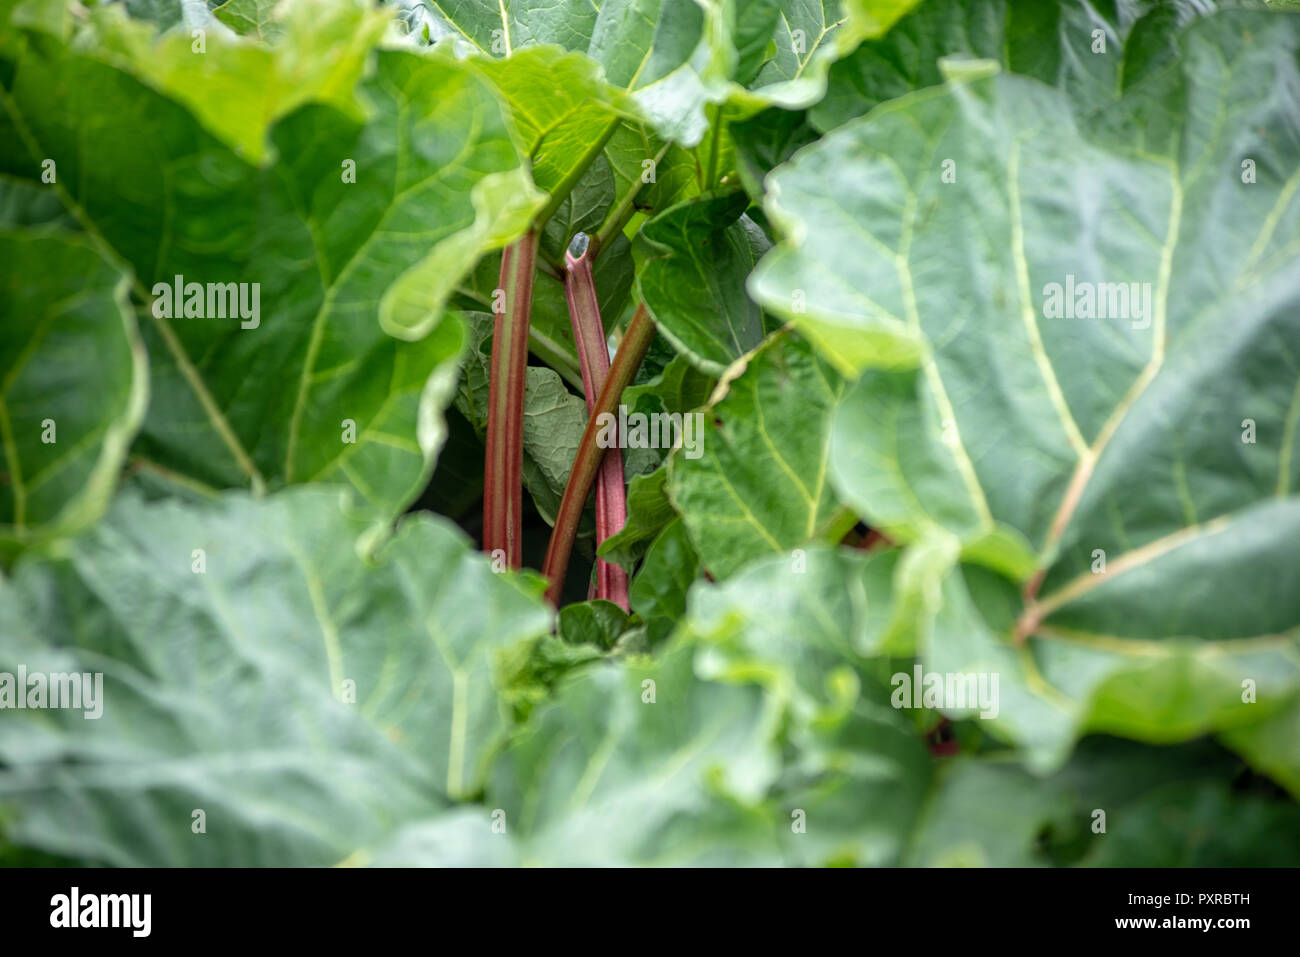 Hoja roja los tallos de la planta de ruibarbo (Rheum rhabarbarum) aparecen bajo la cobertura de sus hojas, Zwoleń, Masovian voivodato, Polonia Foto de stock